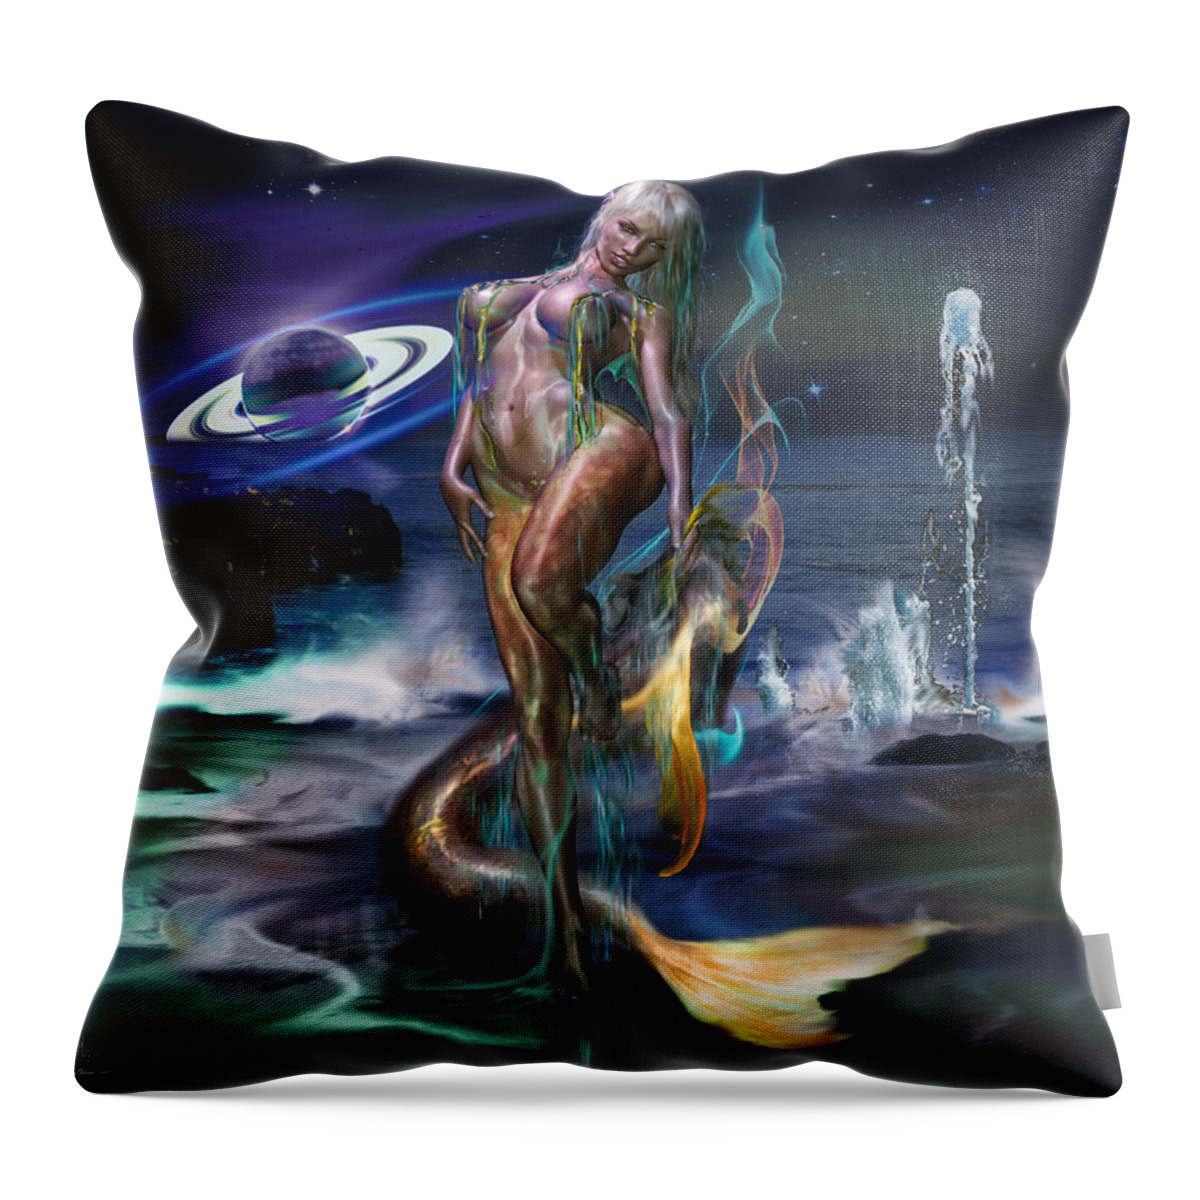 Mermaids Throw Pillow featuring the photograph Mermaids Moon Light by Glenn Feron